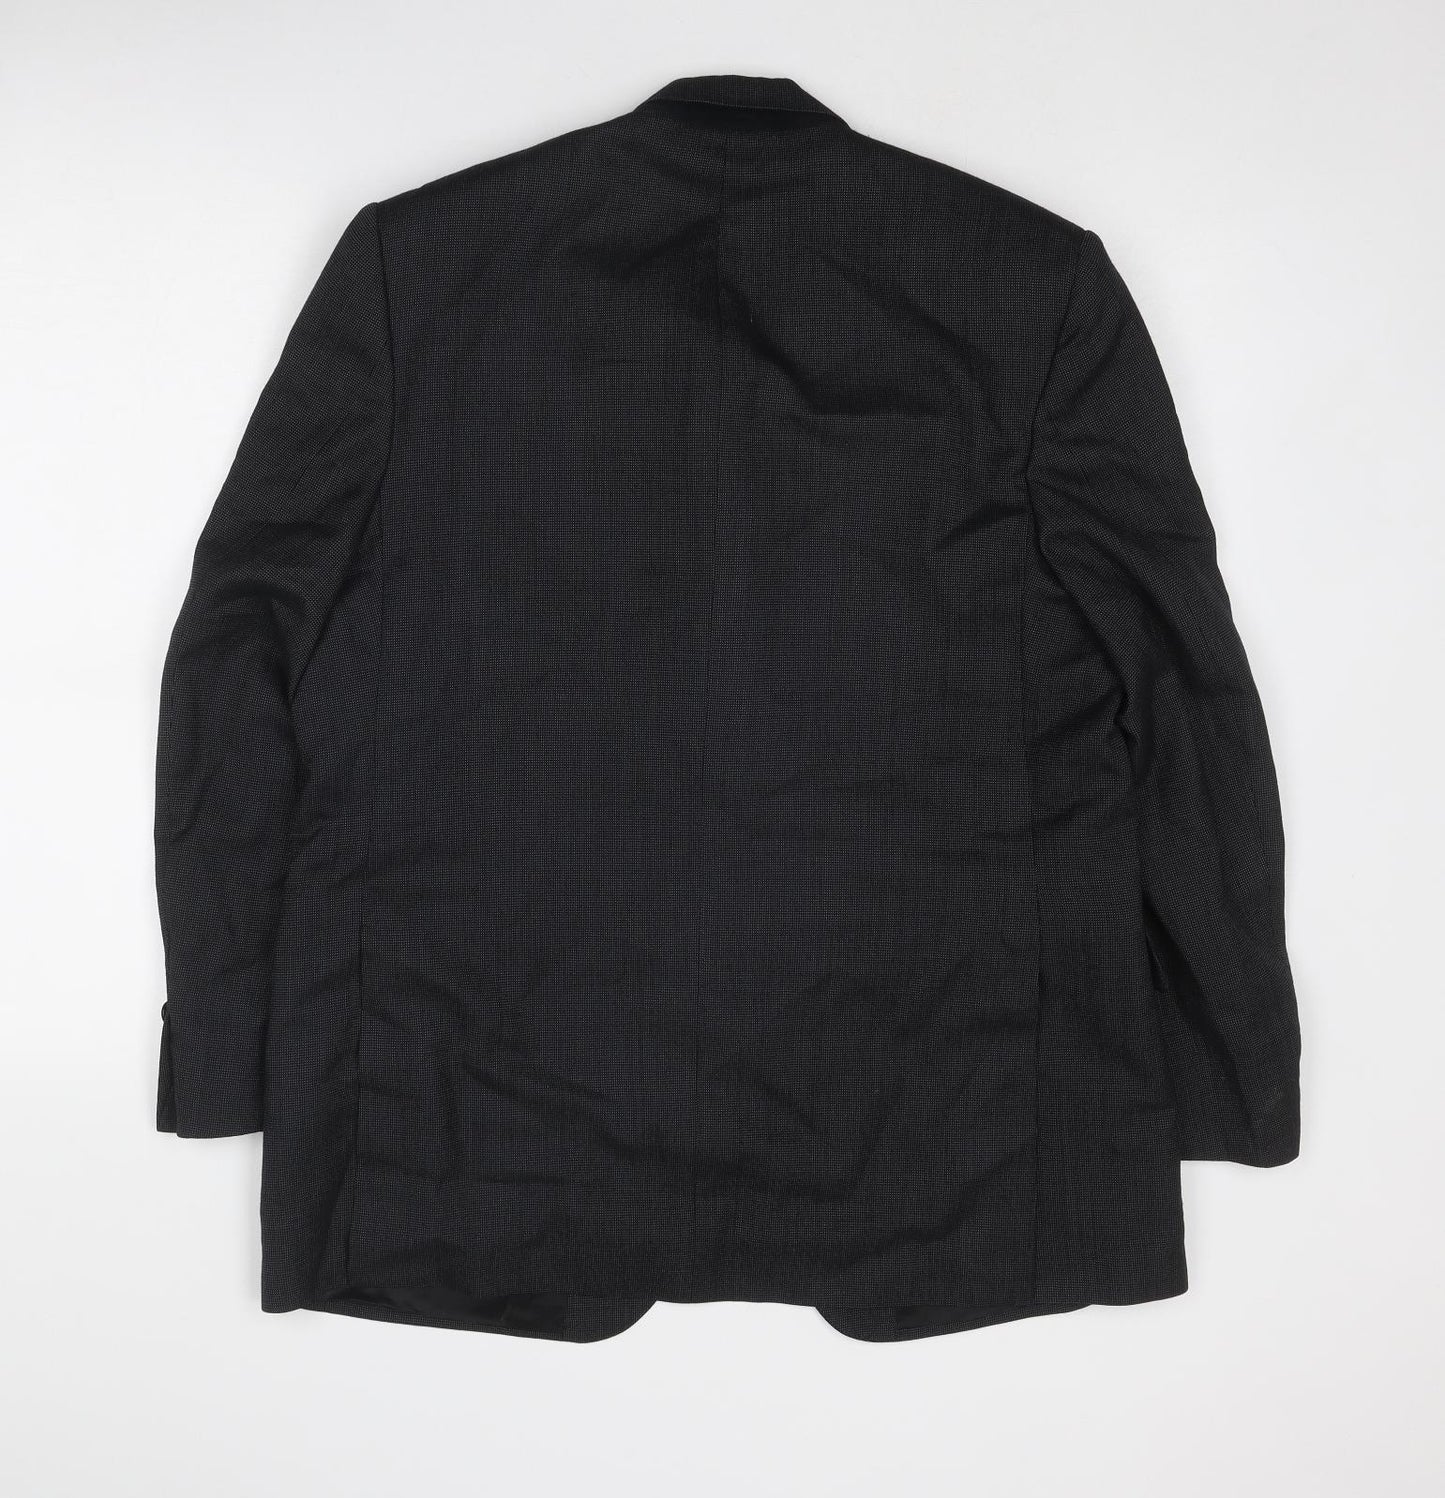 Aquascutum Mens Grey Wool Jacket Suit Jacket Size 42 Regular